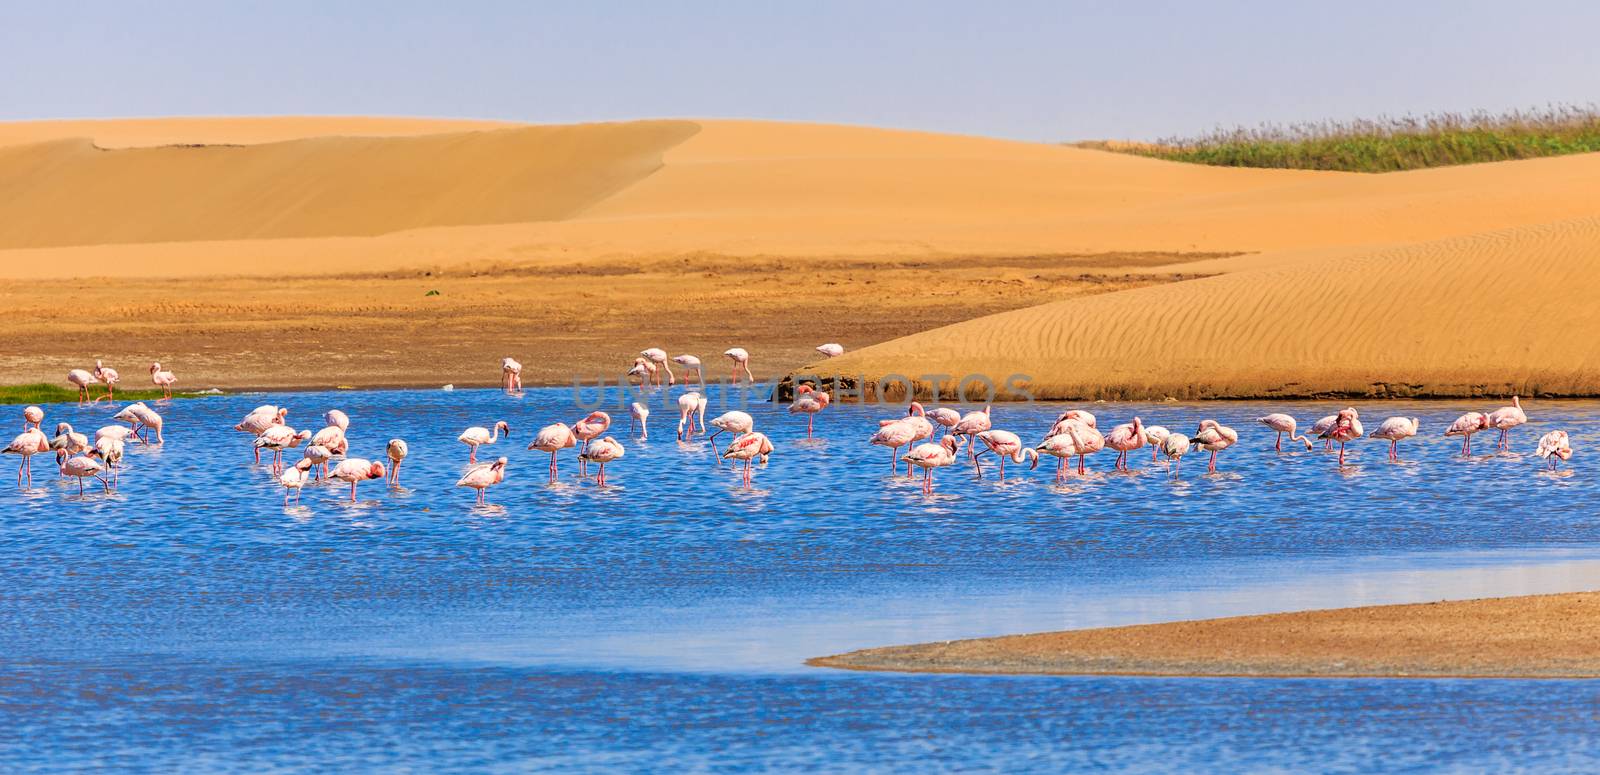 Flock of pink flamingo marching along the dune in Kalahari Deser by ambeon